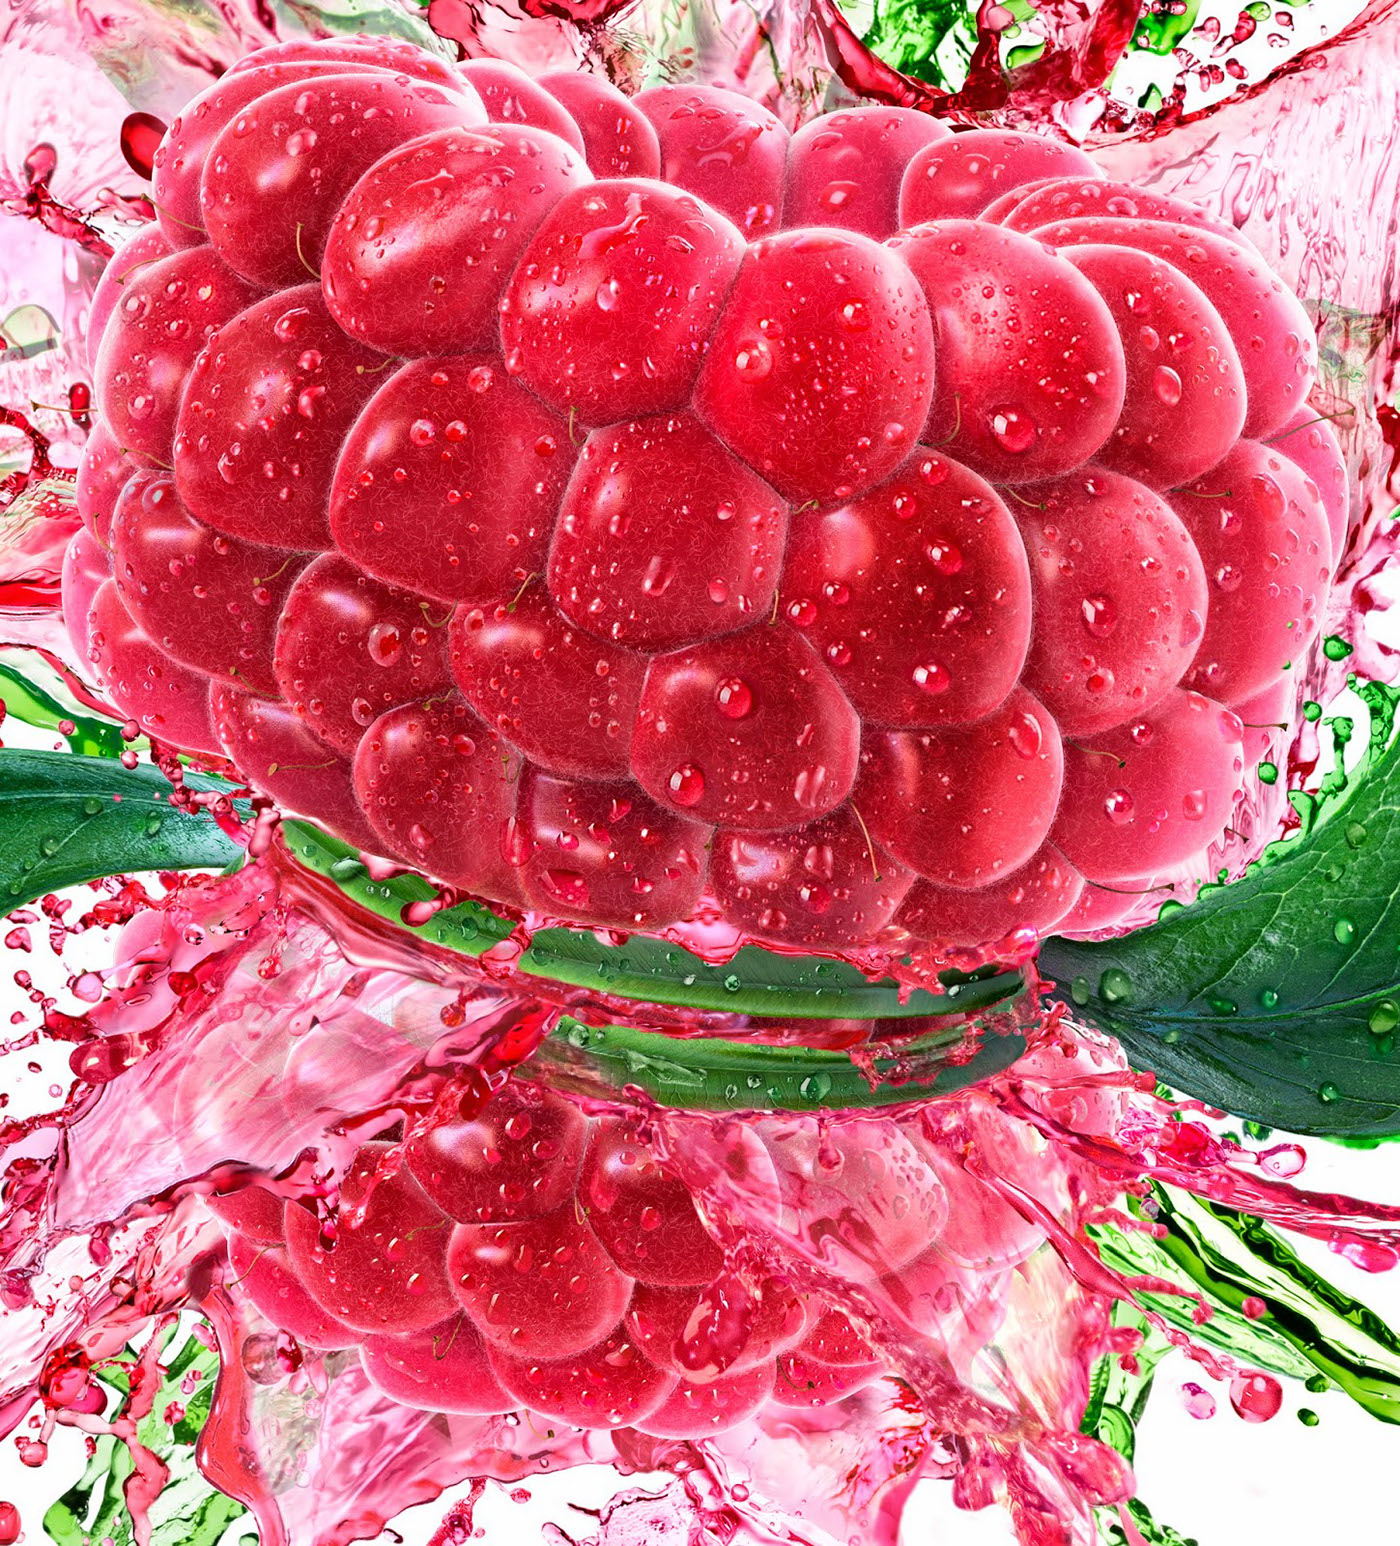 Lipton splash raspberry